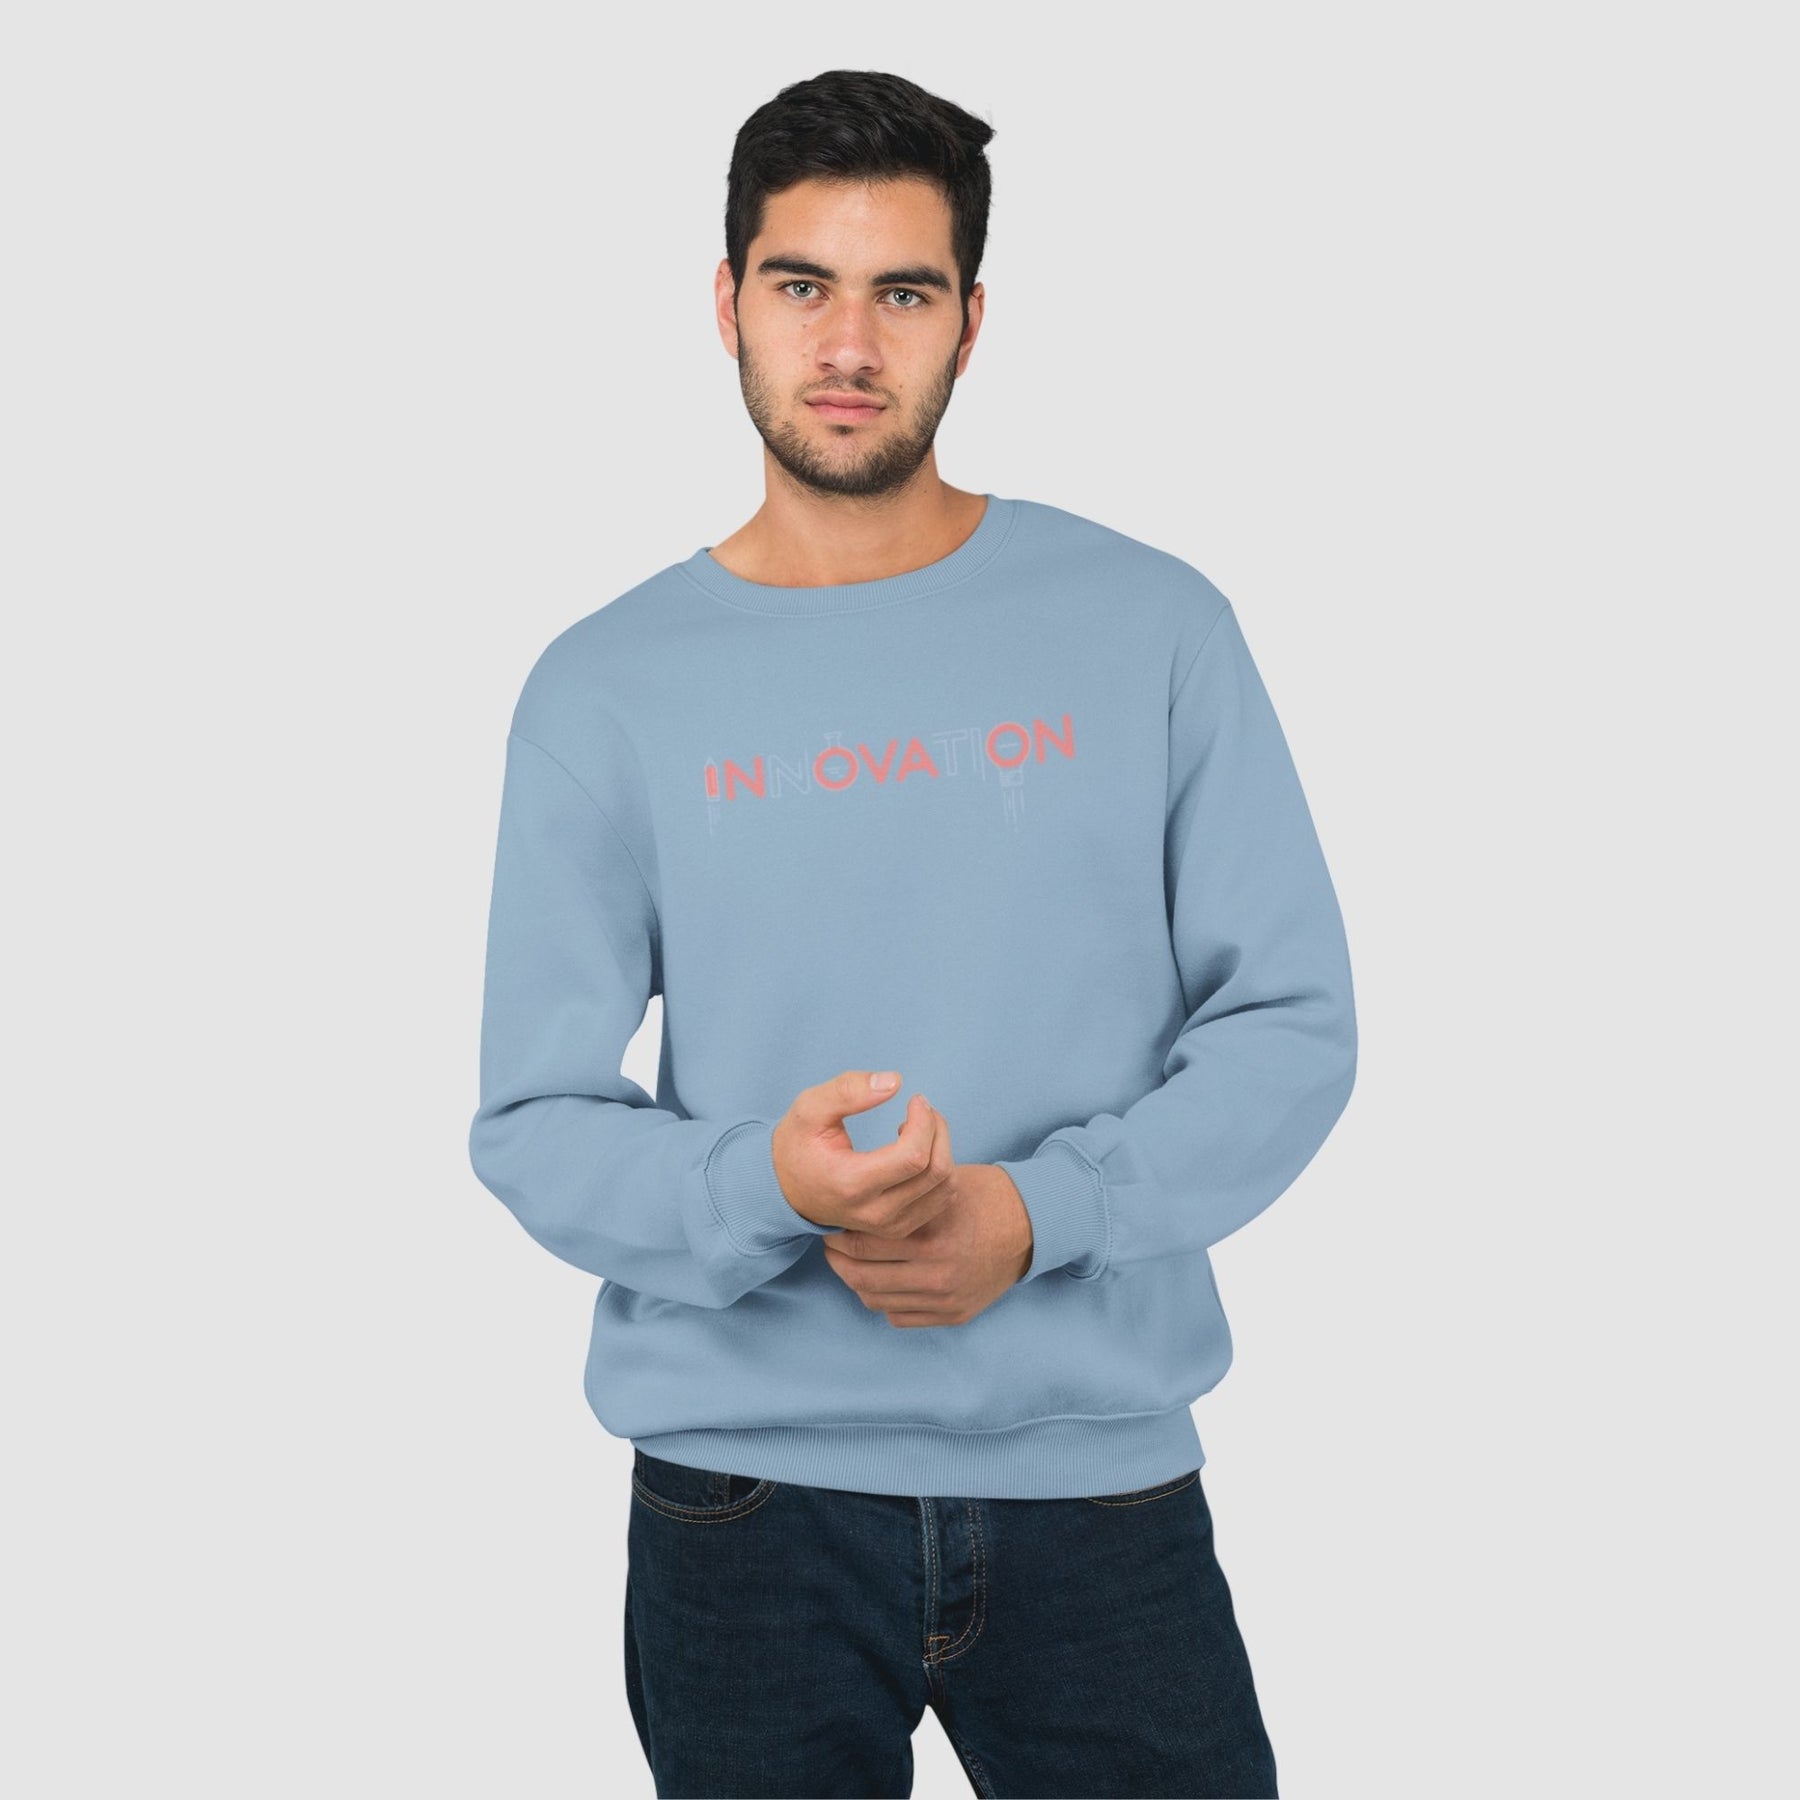 innovation-cotton-printed-unisex-light-blue-sweatshirt-men-model-gogirgit-com